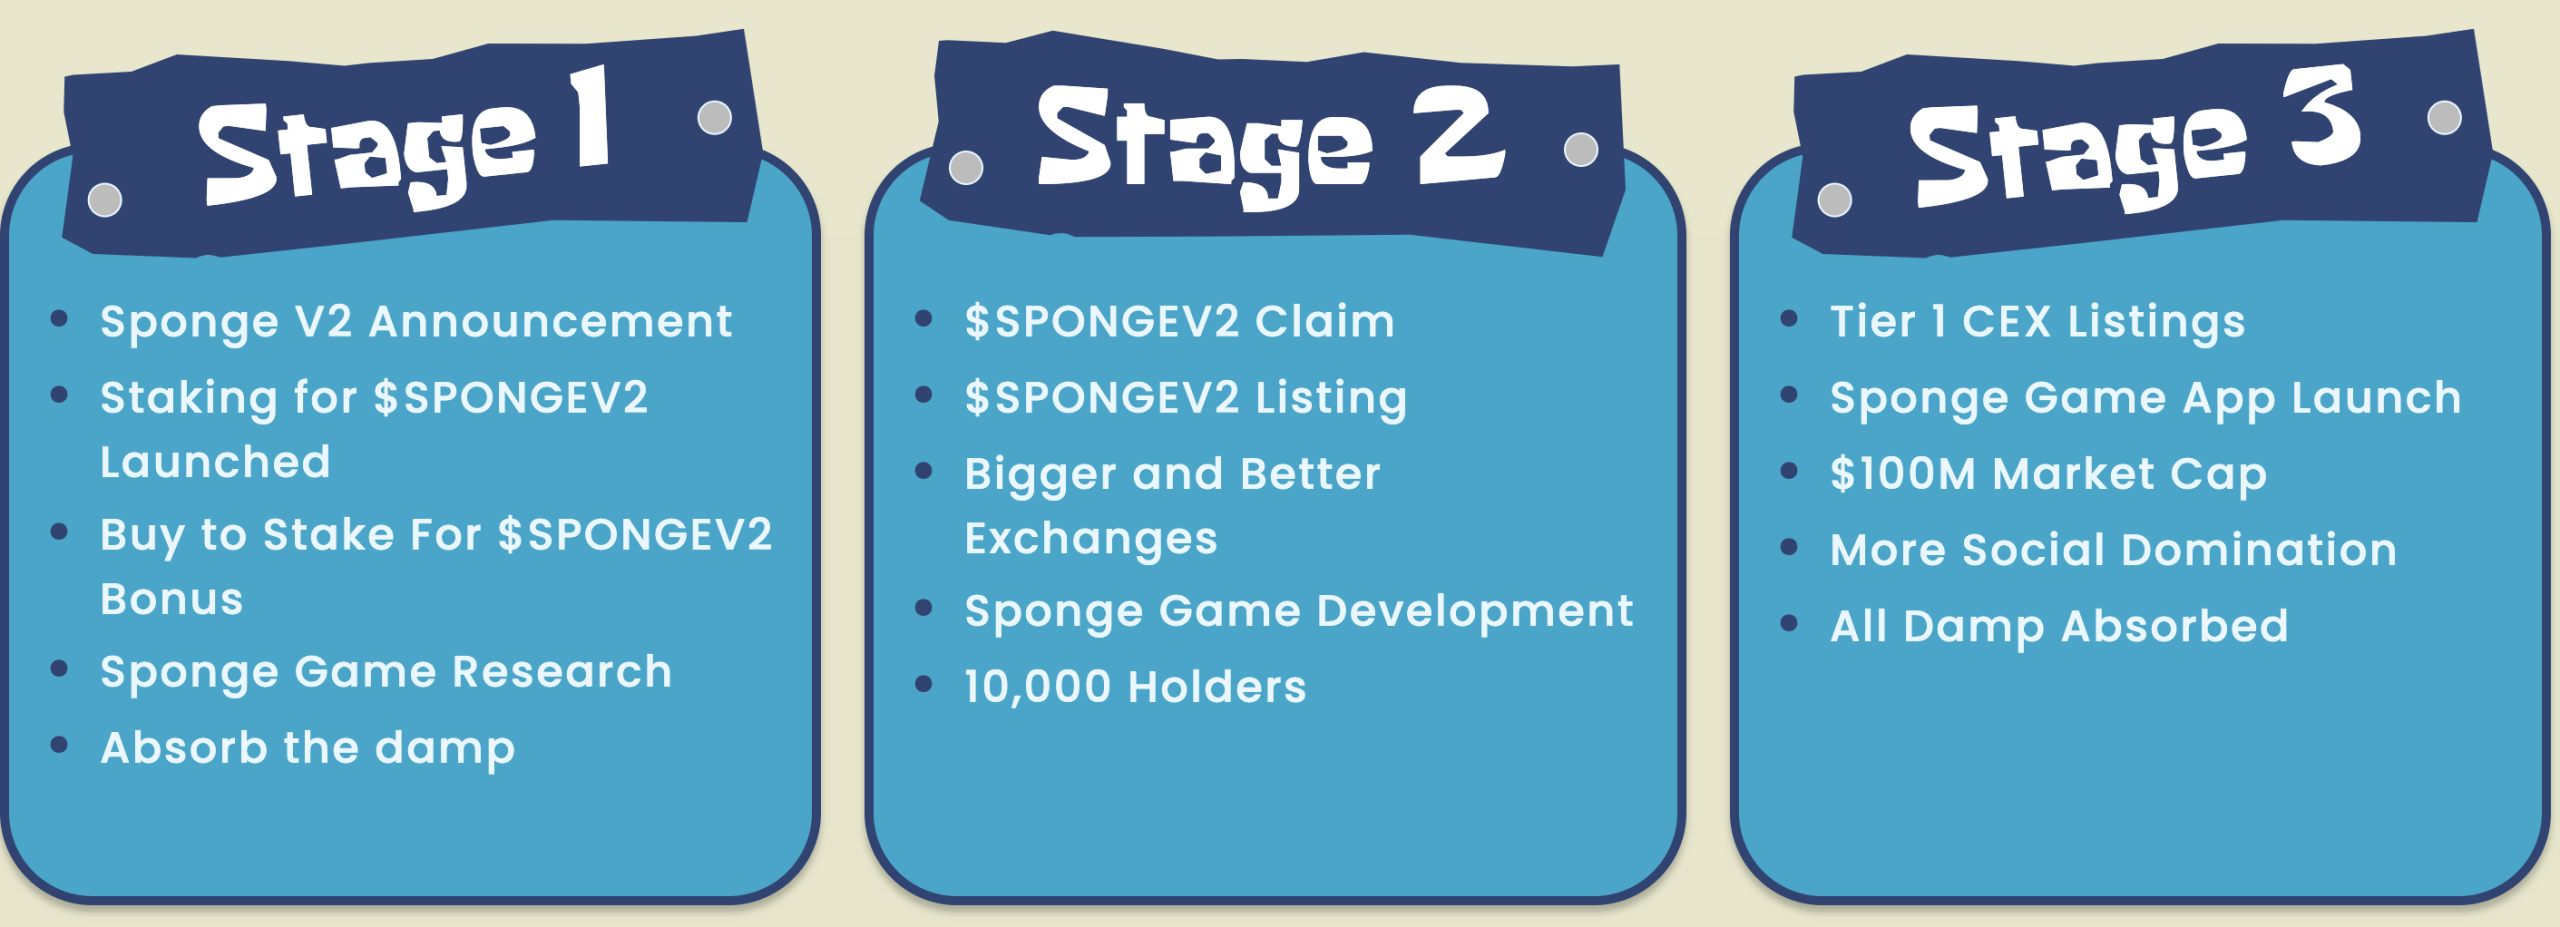 SpongeV2 roadmap